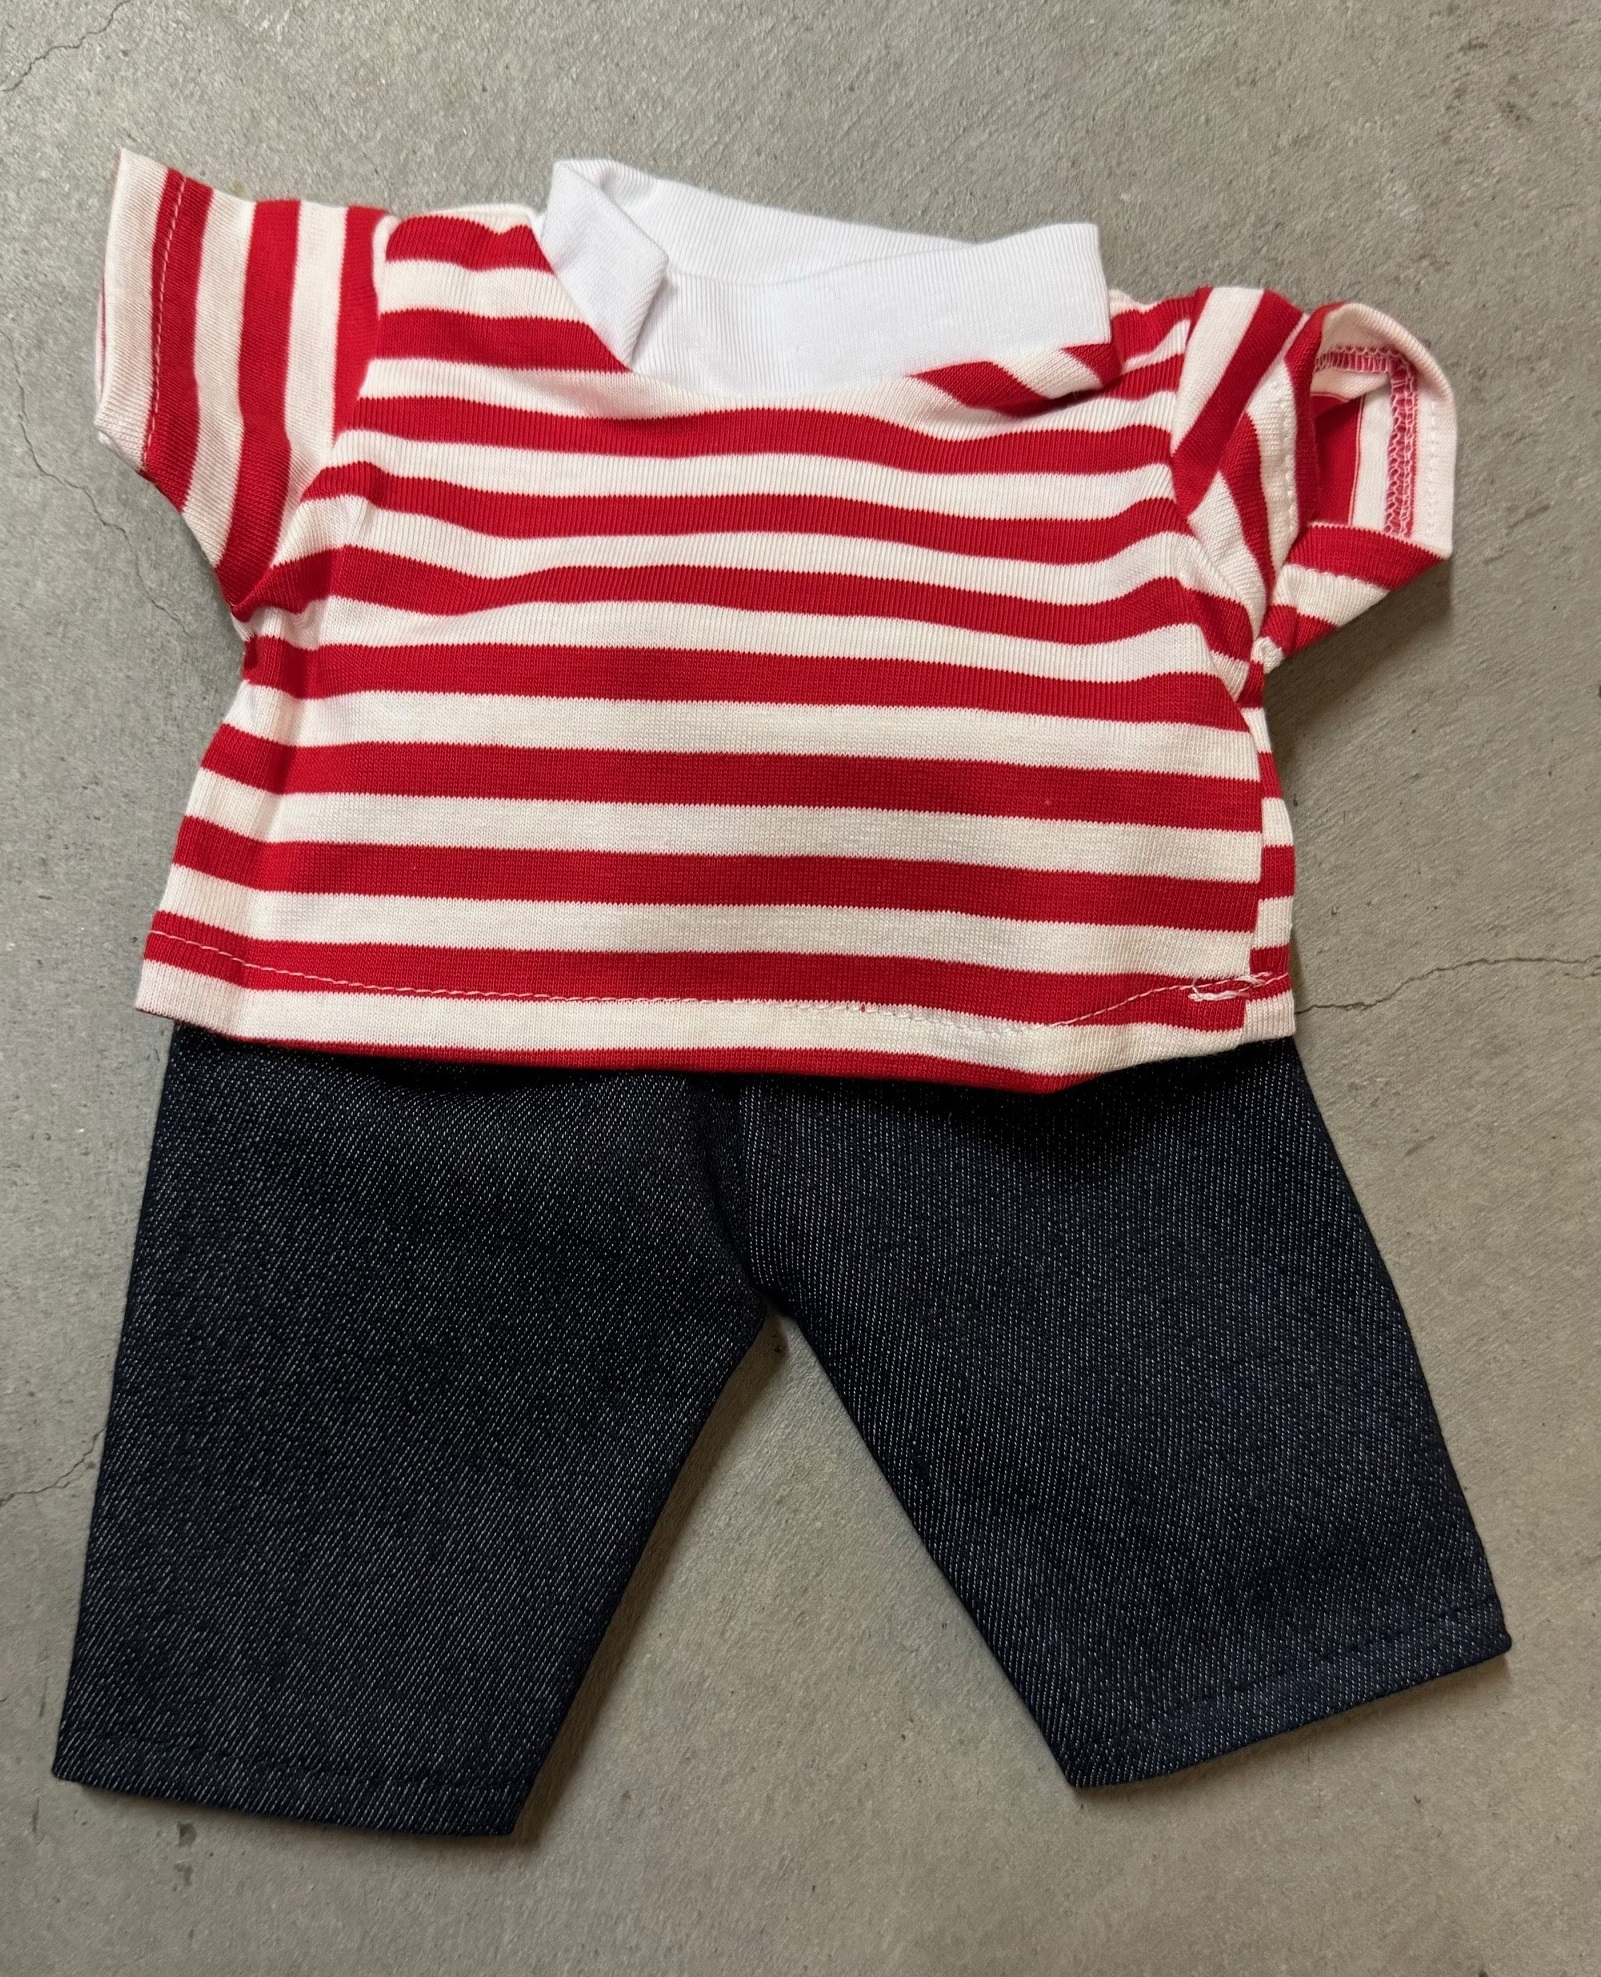 Shirt mit Hose rot-weiß gestreift, 30 cm Puppen